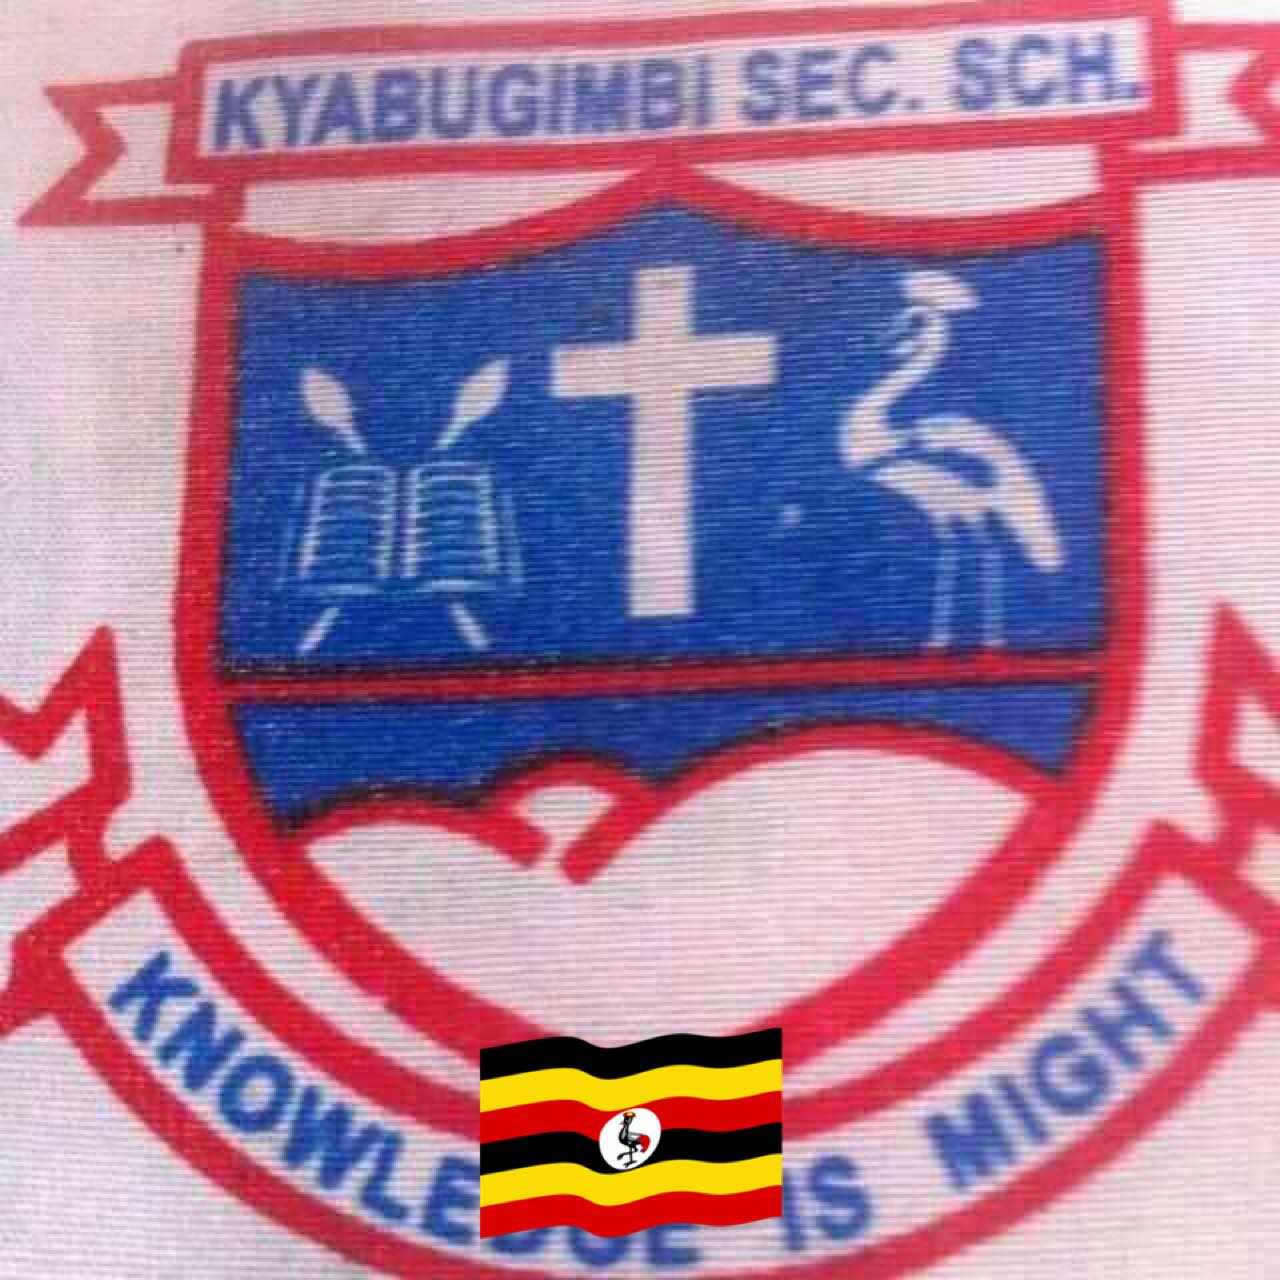 Kyabujimbi Secondary School